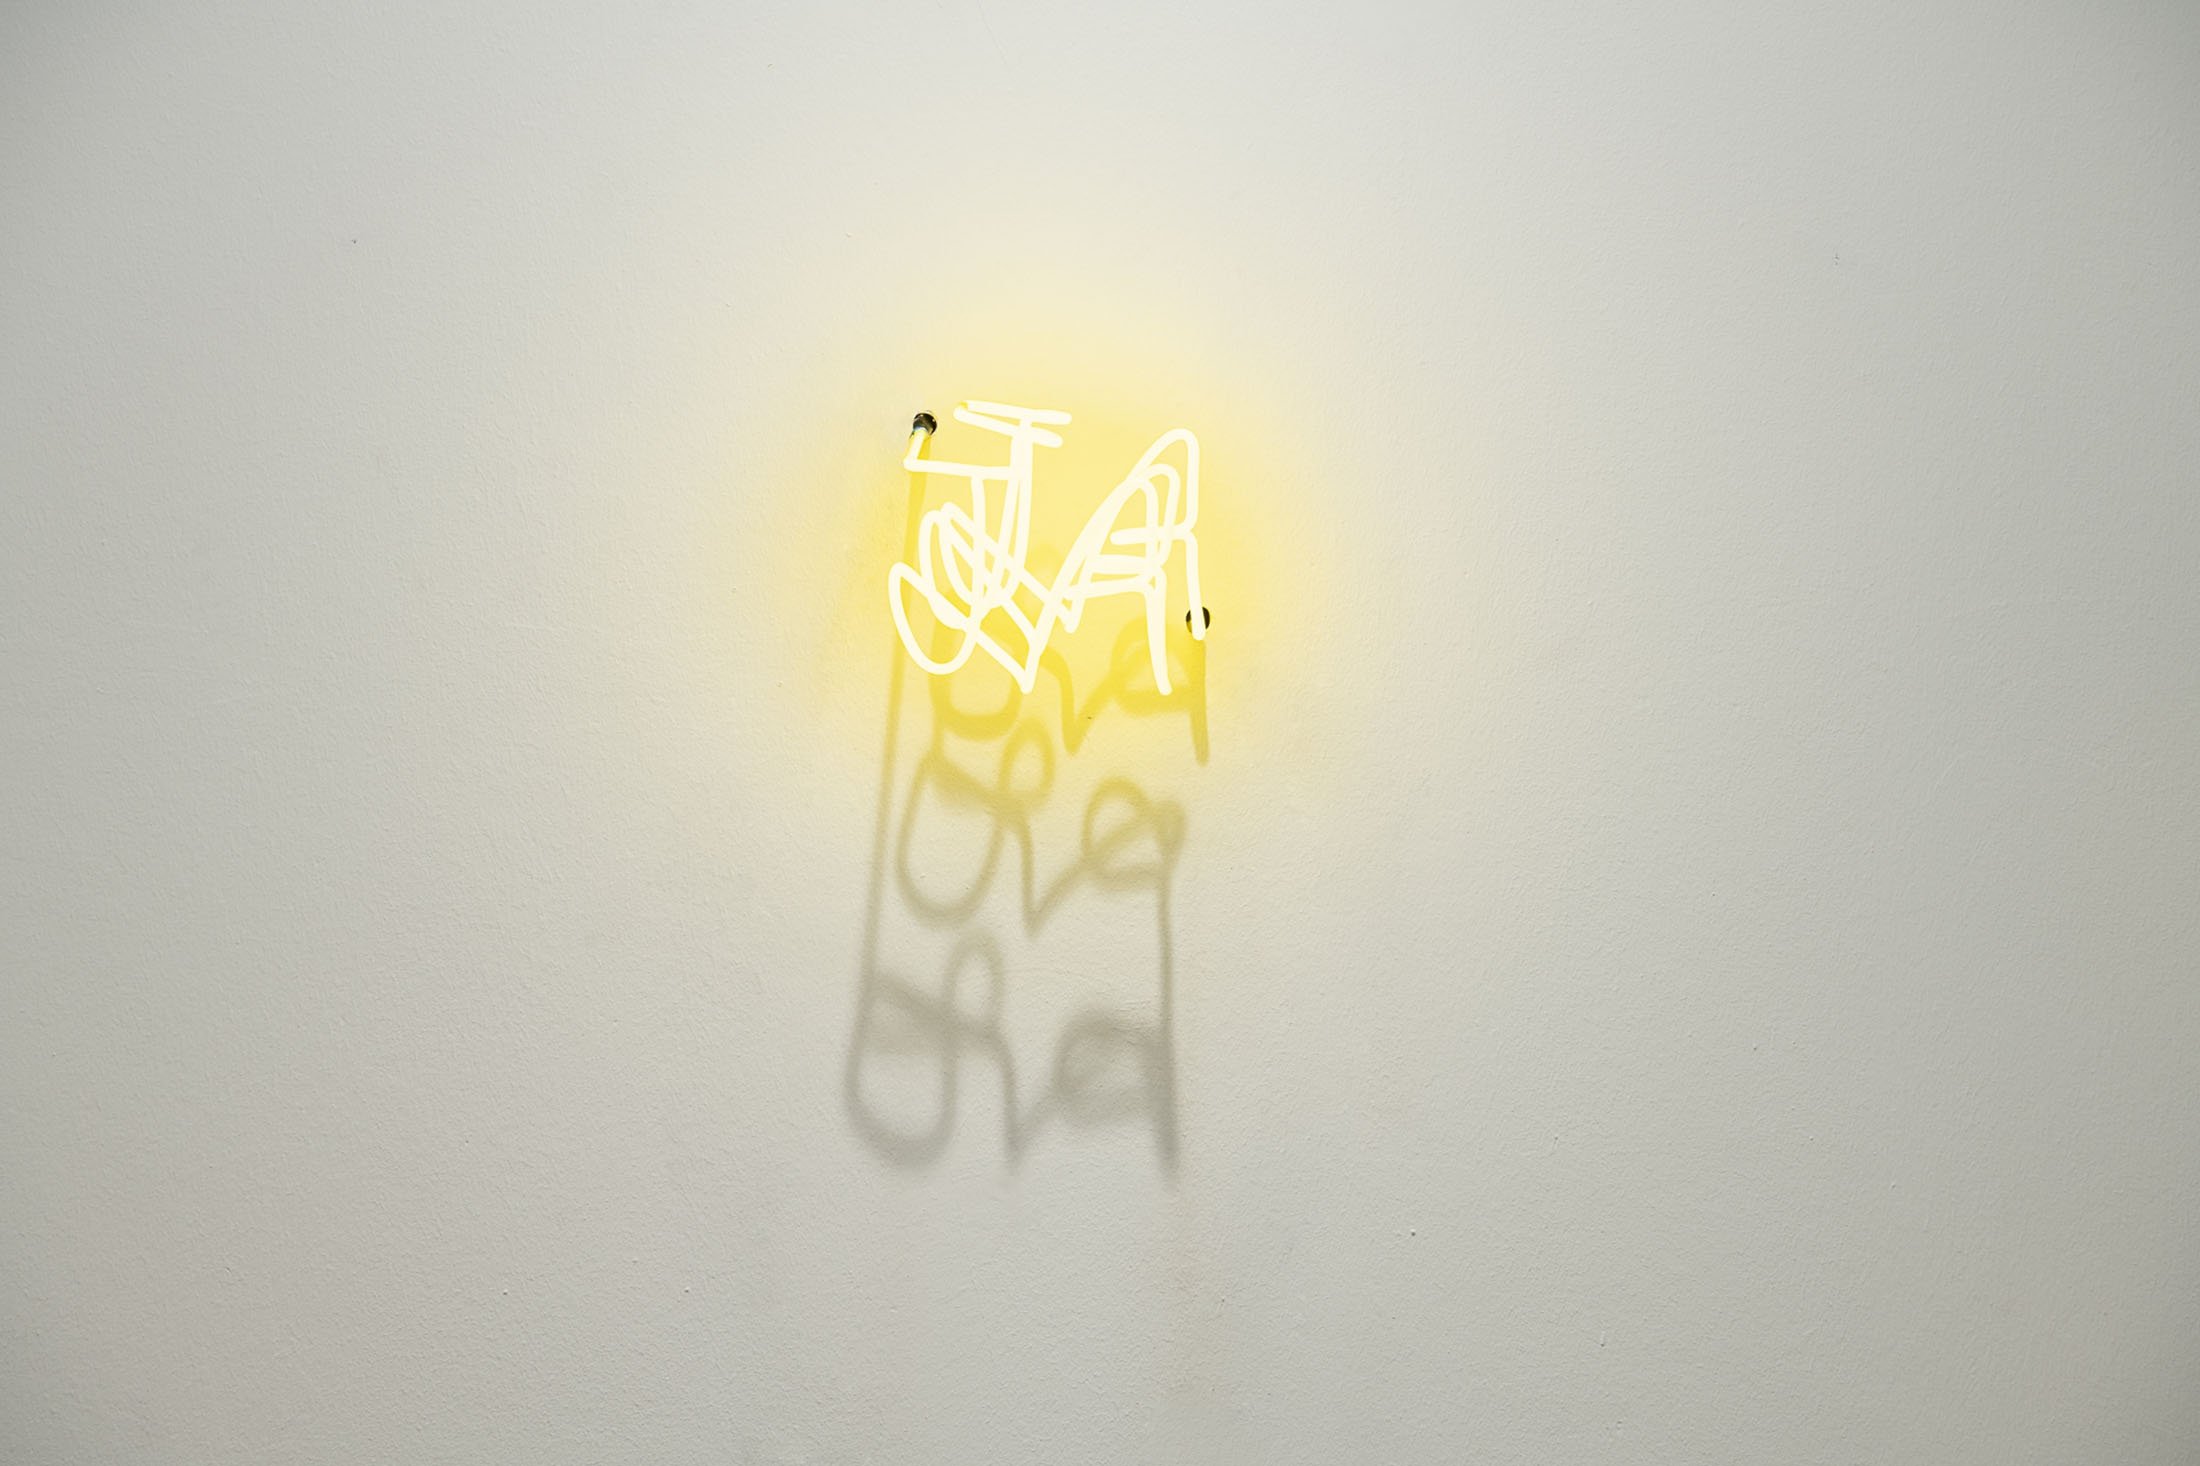 Ardan Özmenoğlu, 'JA,' 2021, yellow neon tubing and transformator, 19 by 16 by 25 centimeters. (Photo Courtesy of Anna Laudel)